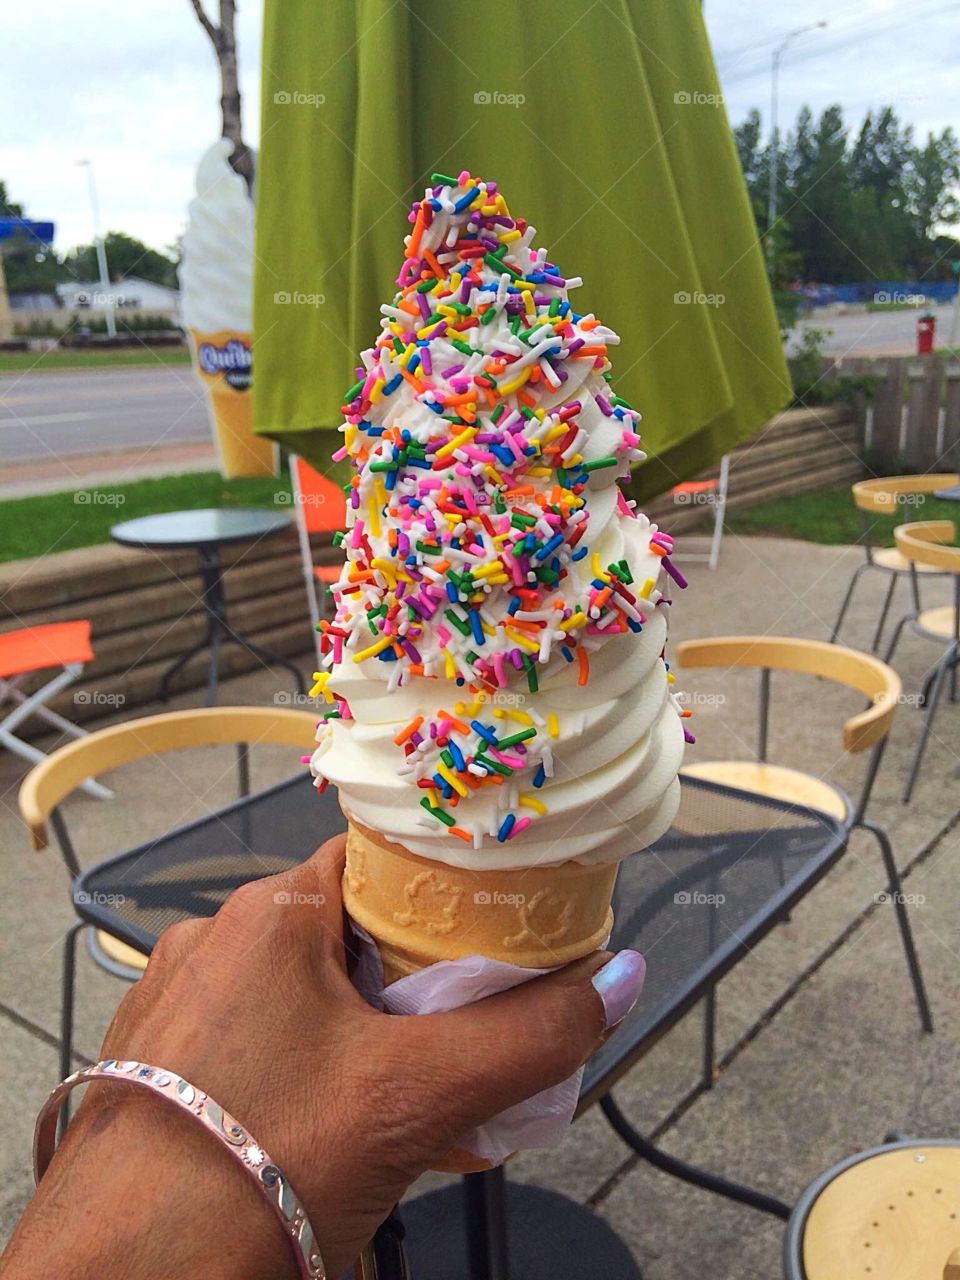 Ice cream cone! How can I resist!